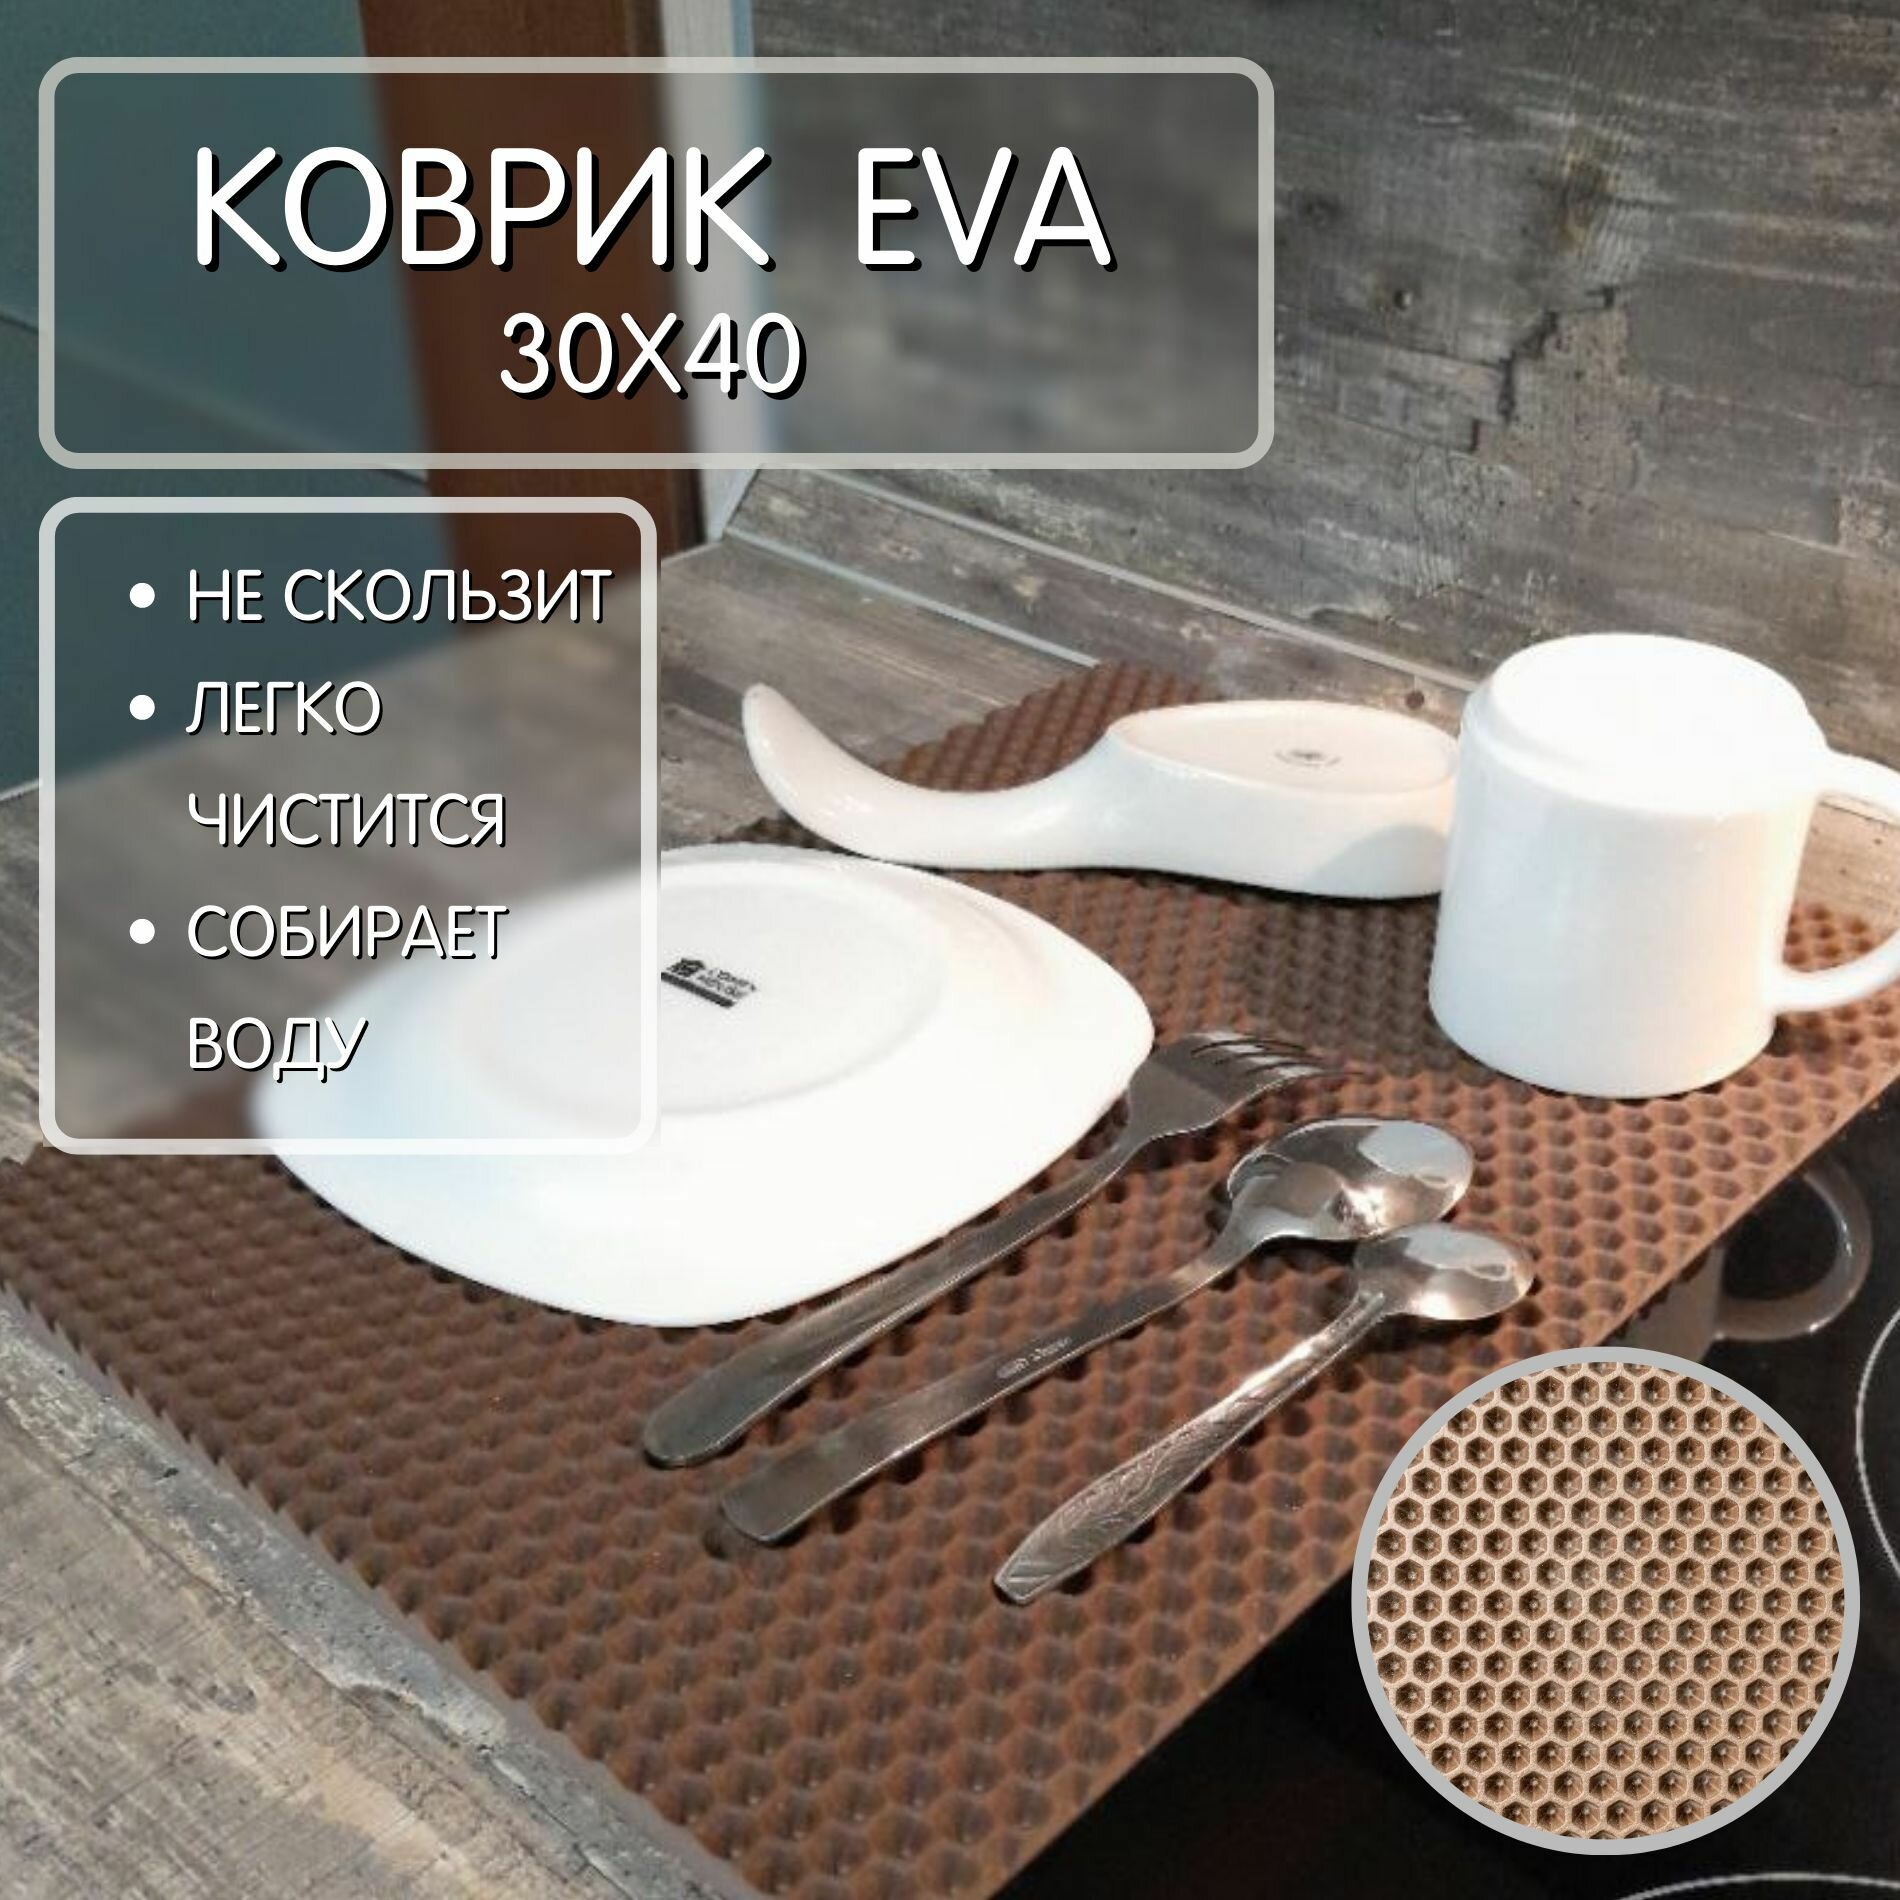 Коврик для сушки посуды на кухню EVA 30х40 коричневый